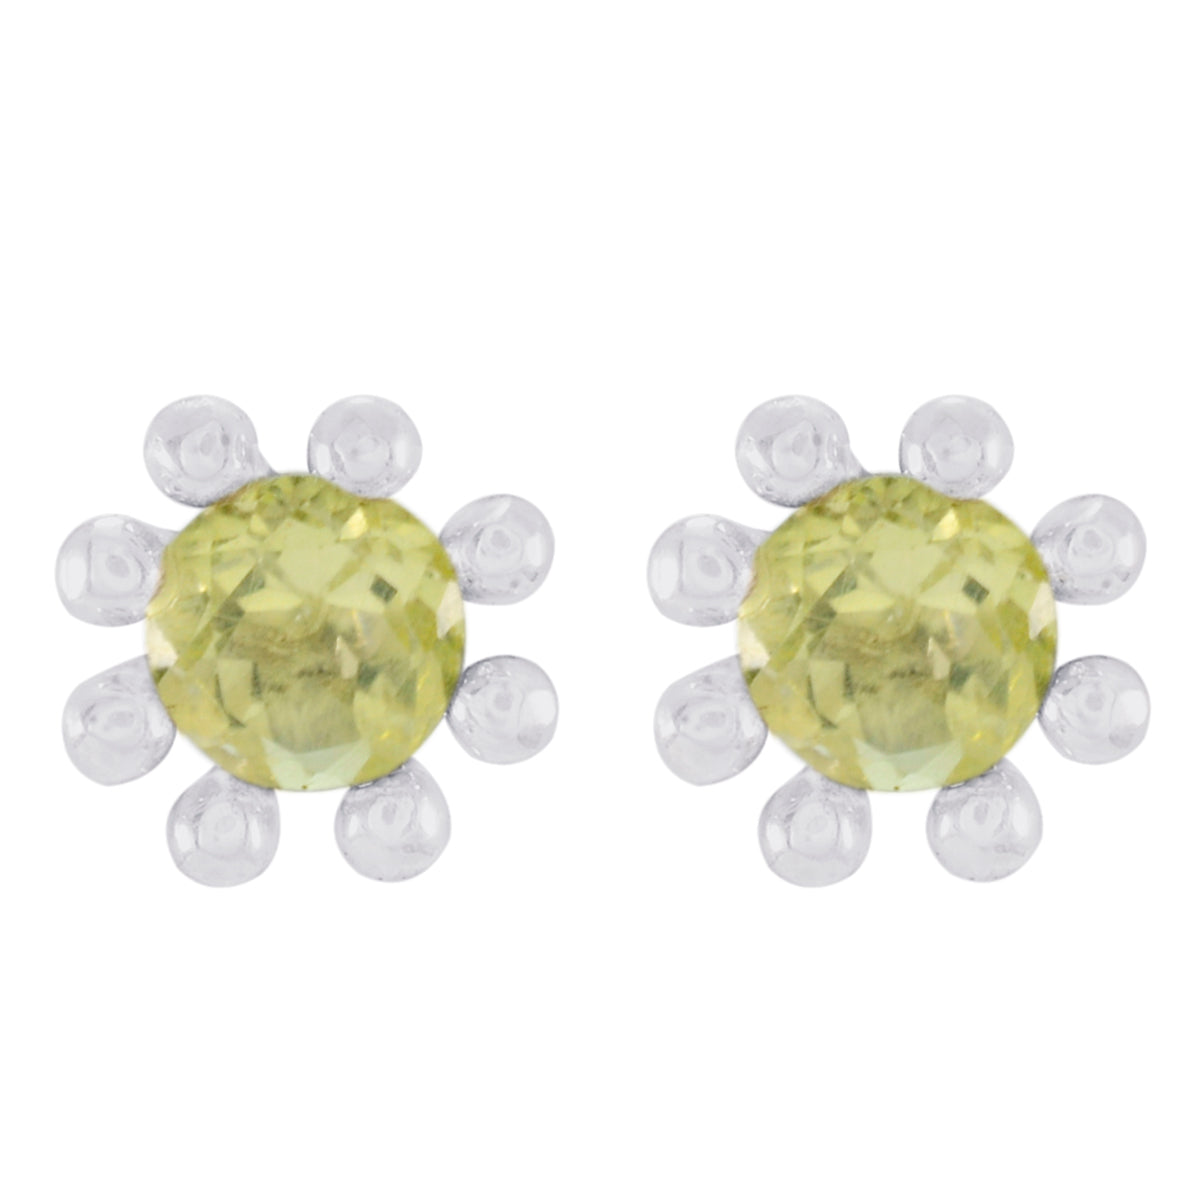 Riyo Natural Gemstone round Faceted Yellow Lemon Quartz Silver Earrings gift for anniversary